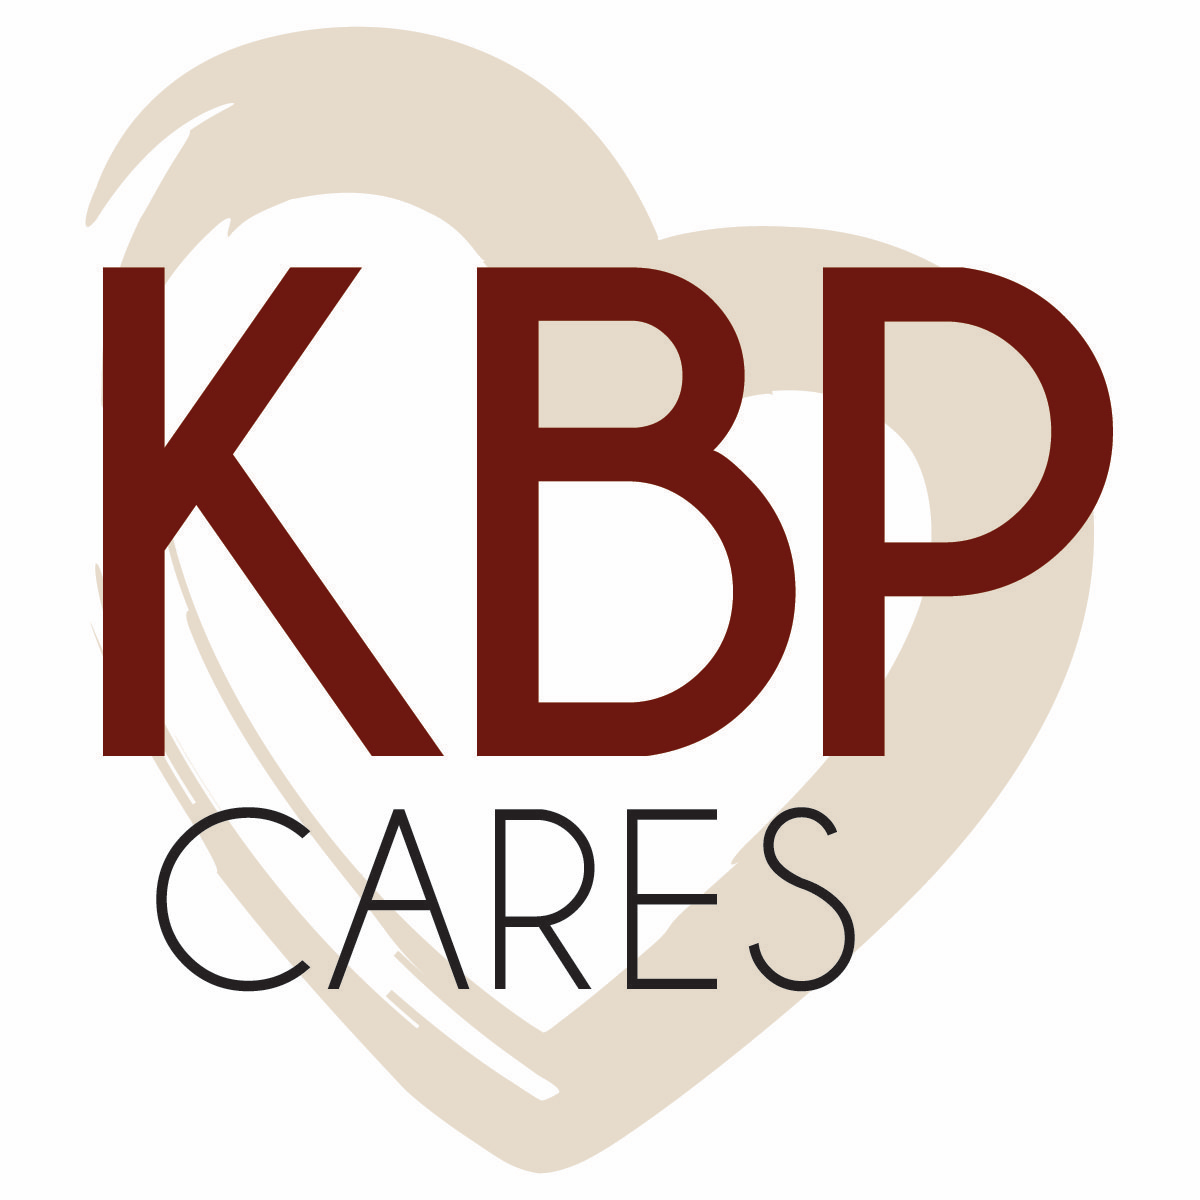 KBP Cares logo